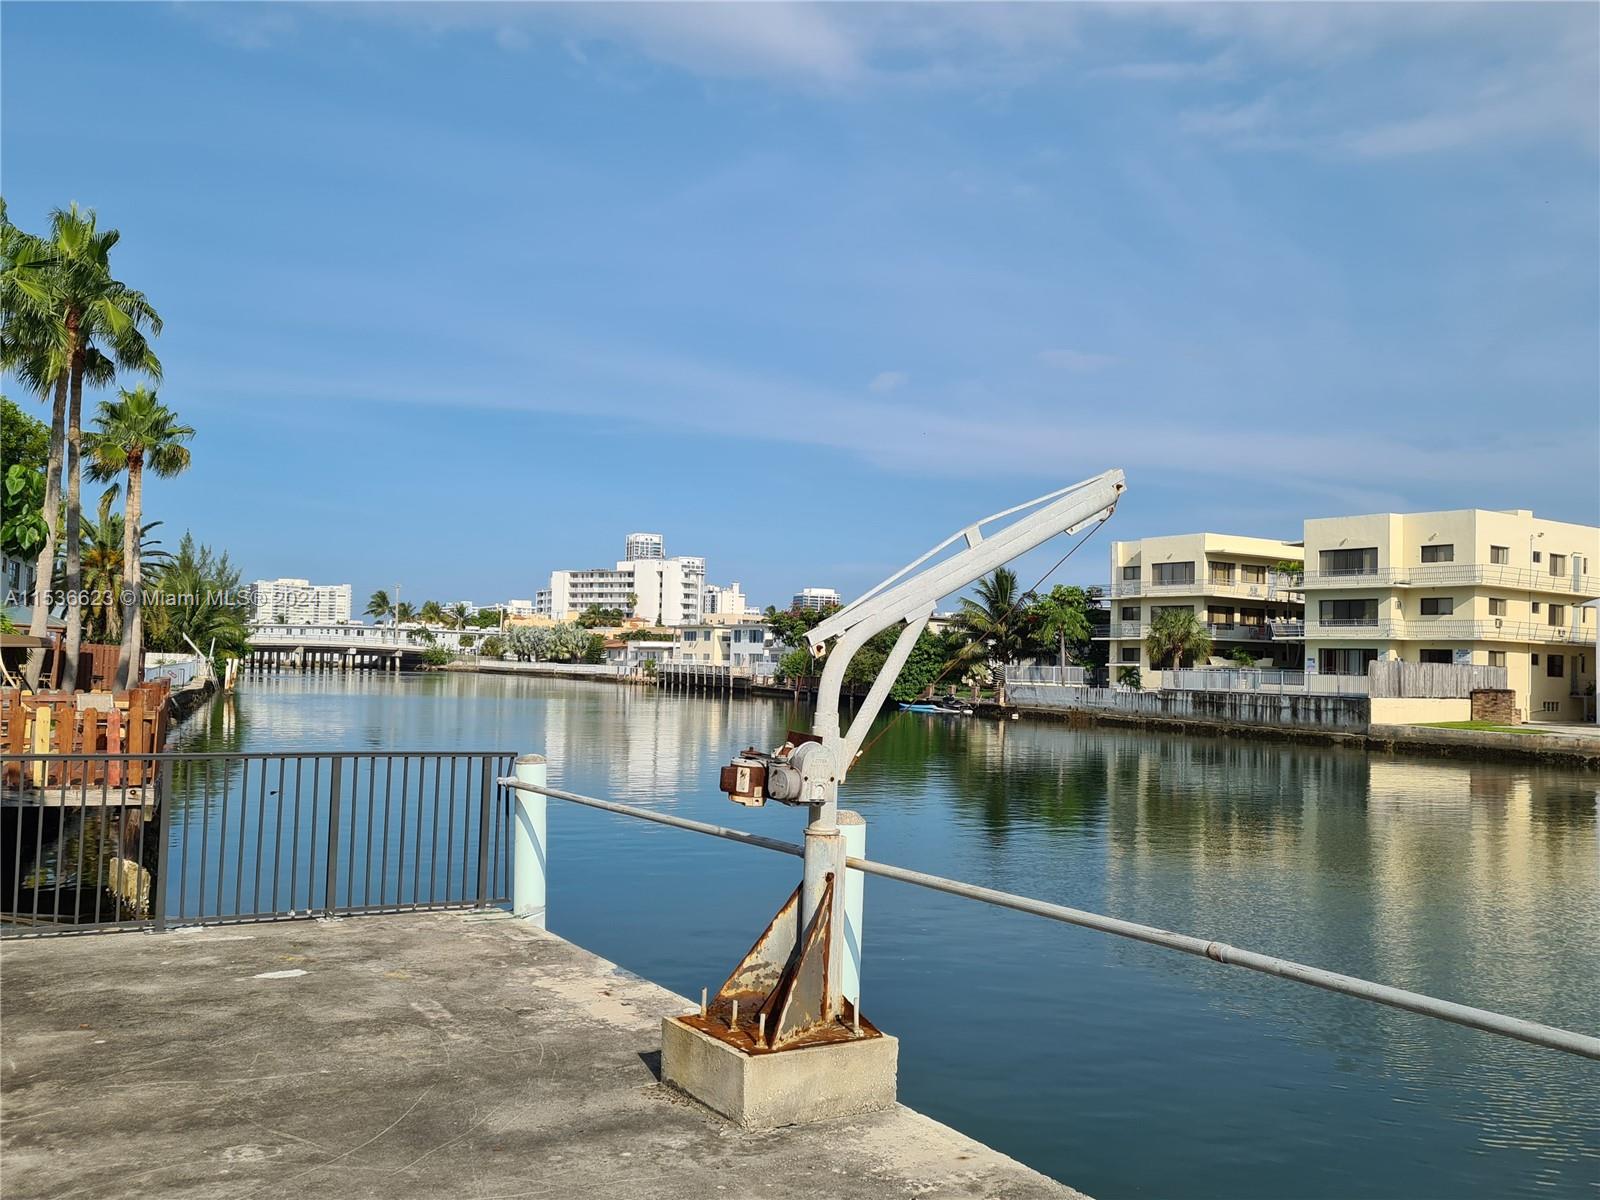 Property for Sale at 110 S Shore Dr 6C, Miami Beach, Miami-Dade County, Florida - Bedrooms: 2 
Bathrooms: 2  - $405,000